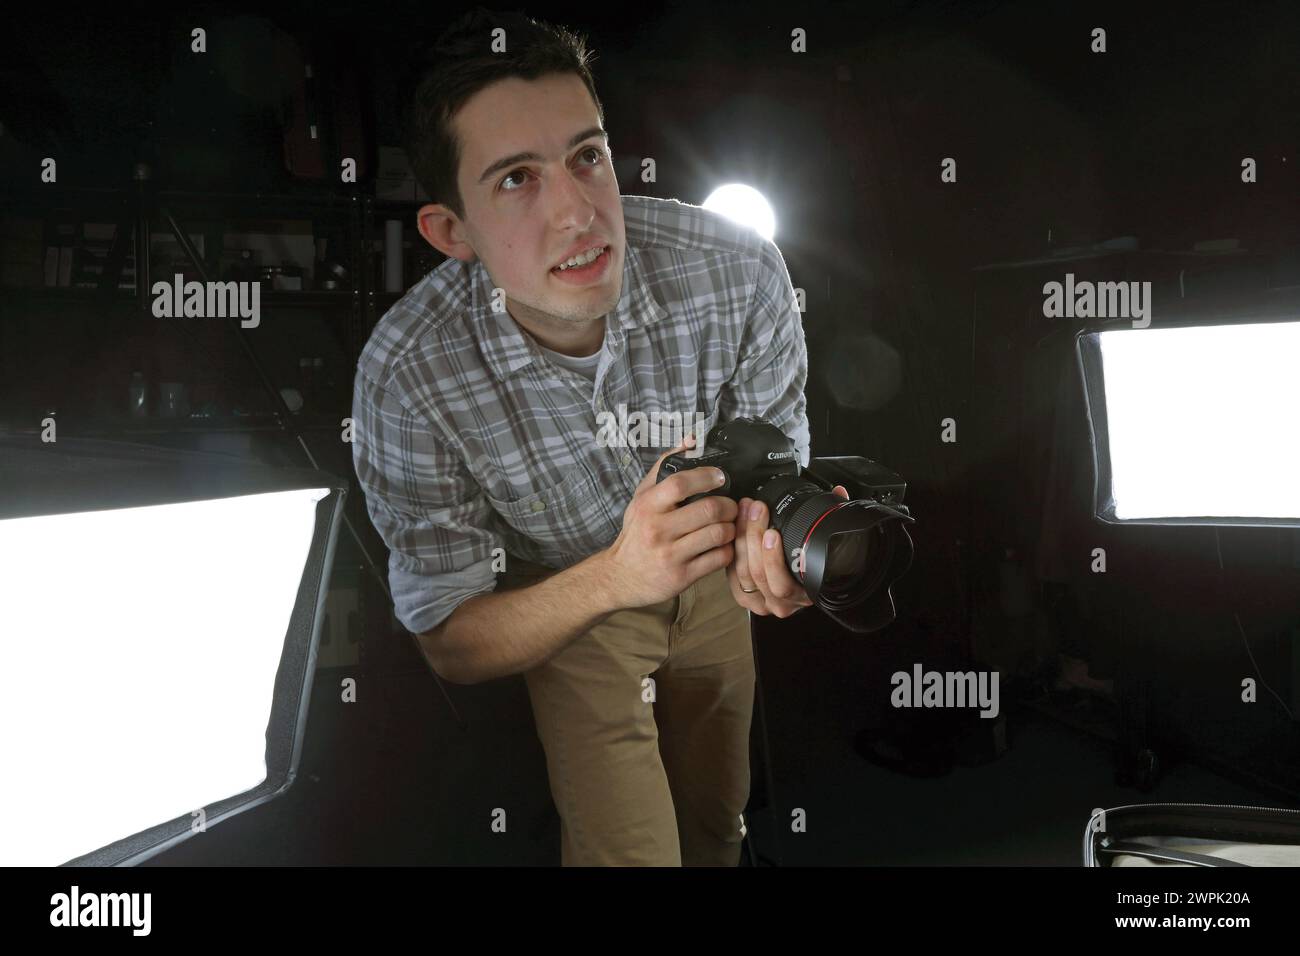 Photographer in studio with lighting equipment Stock Photo